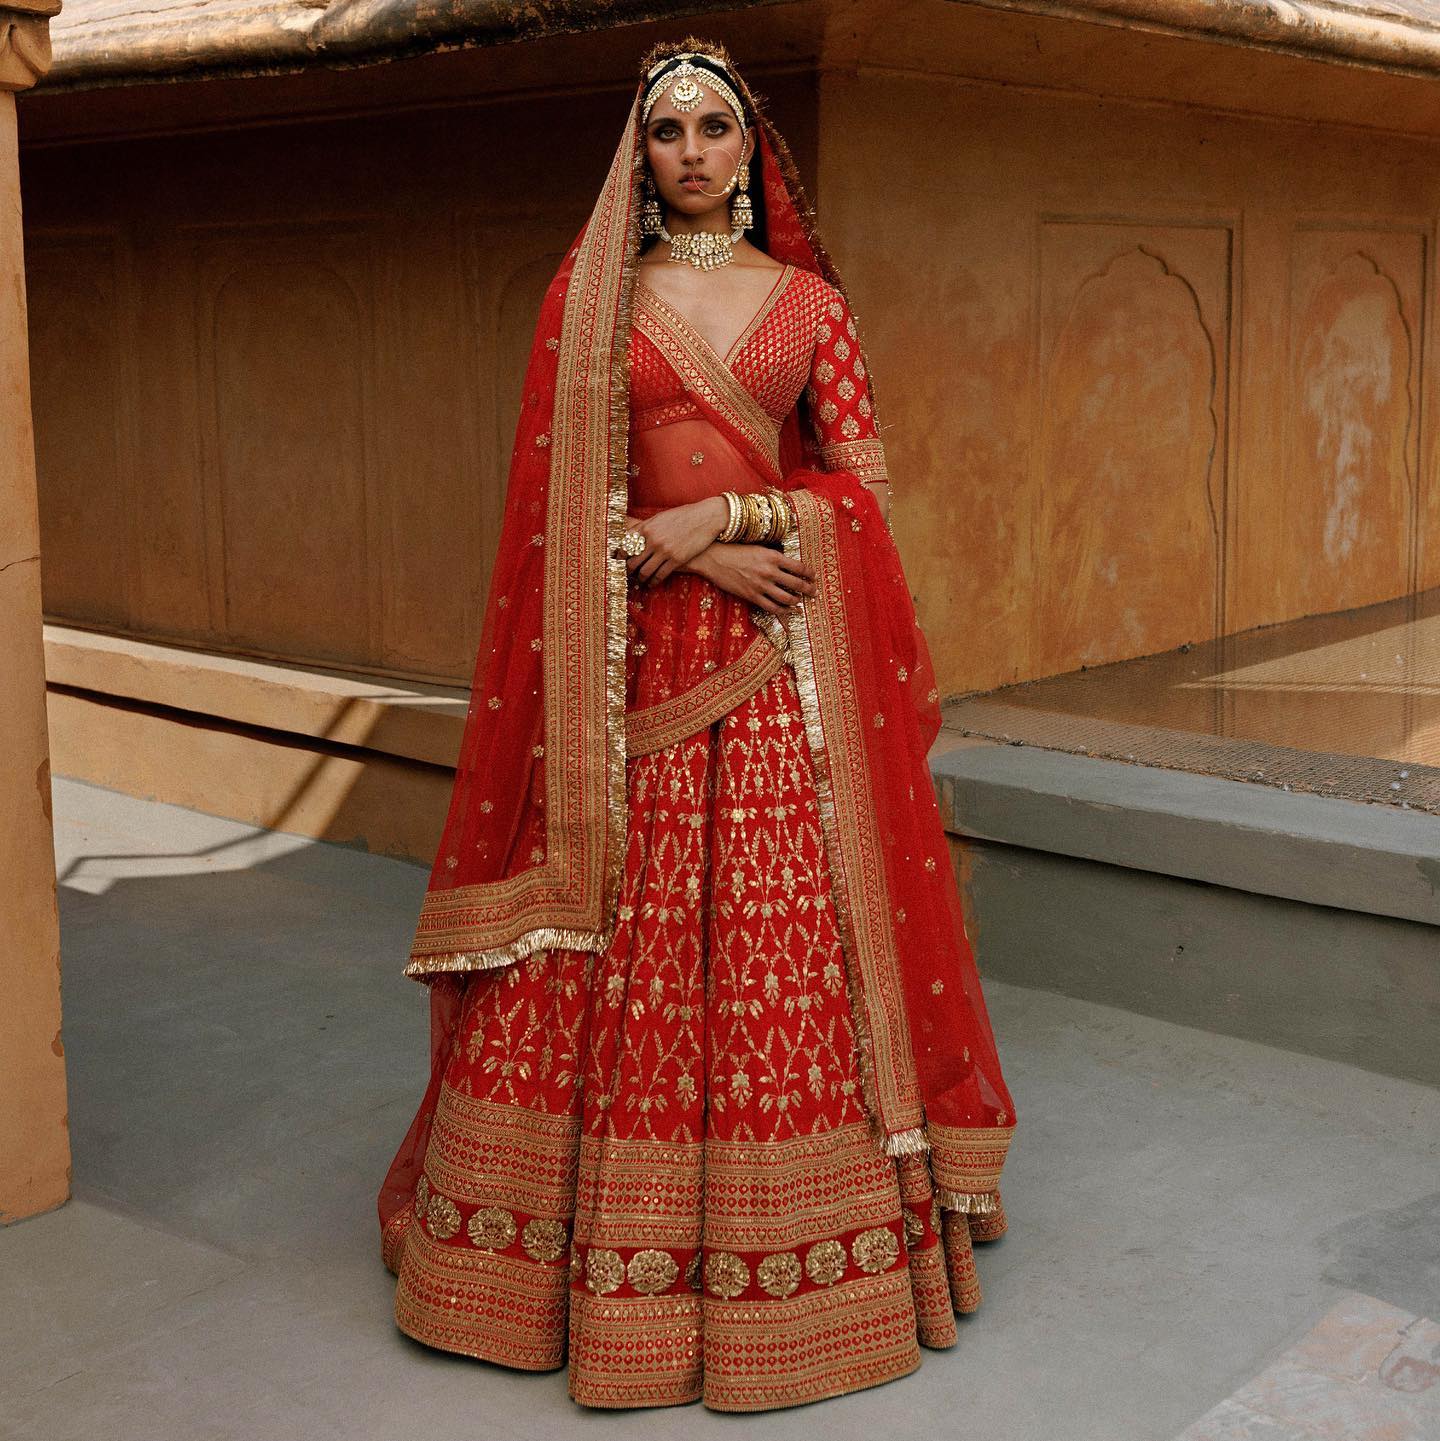 Cheap Vs Expensive: KATRINA KAIF's 17 Lakh Sabyasachi Red Lehenga In ₹6875  Vs ₹19000| Chandni Chowk - YouTube